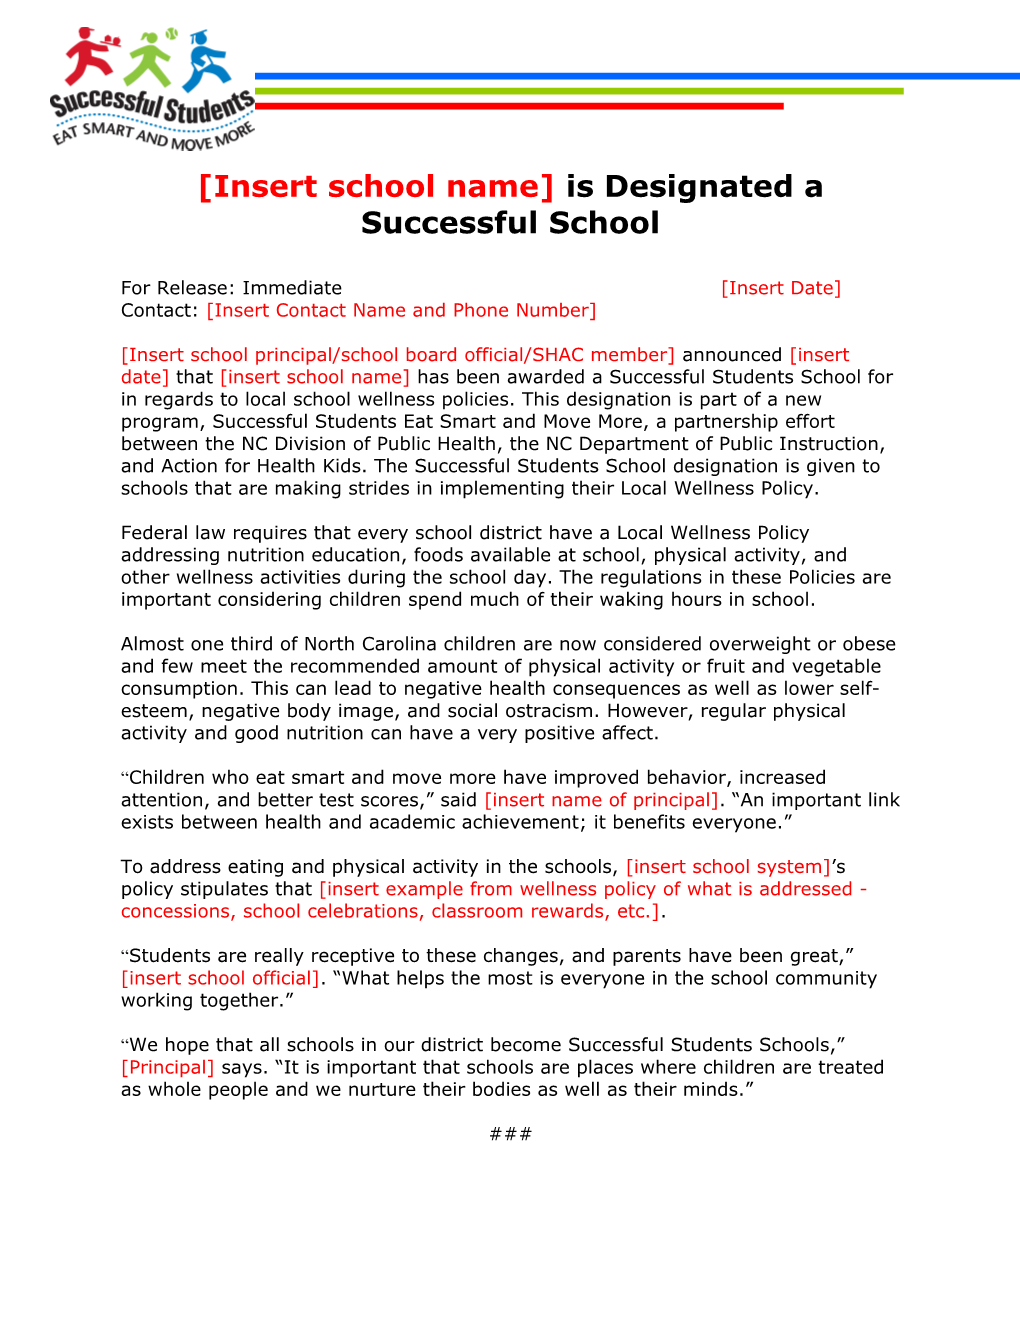 Insert School Name Is Designated a Successful School